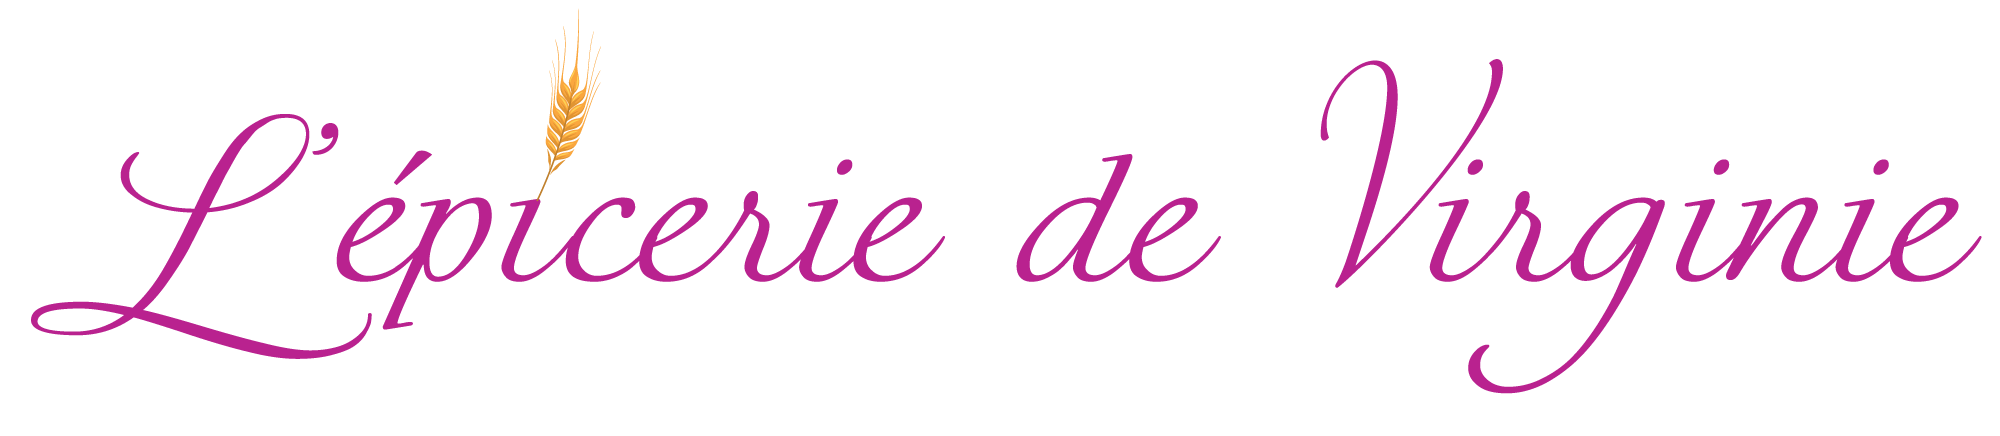 logo-text3